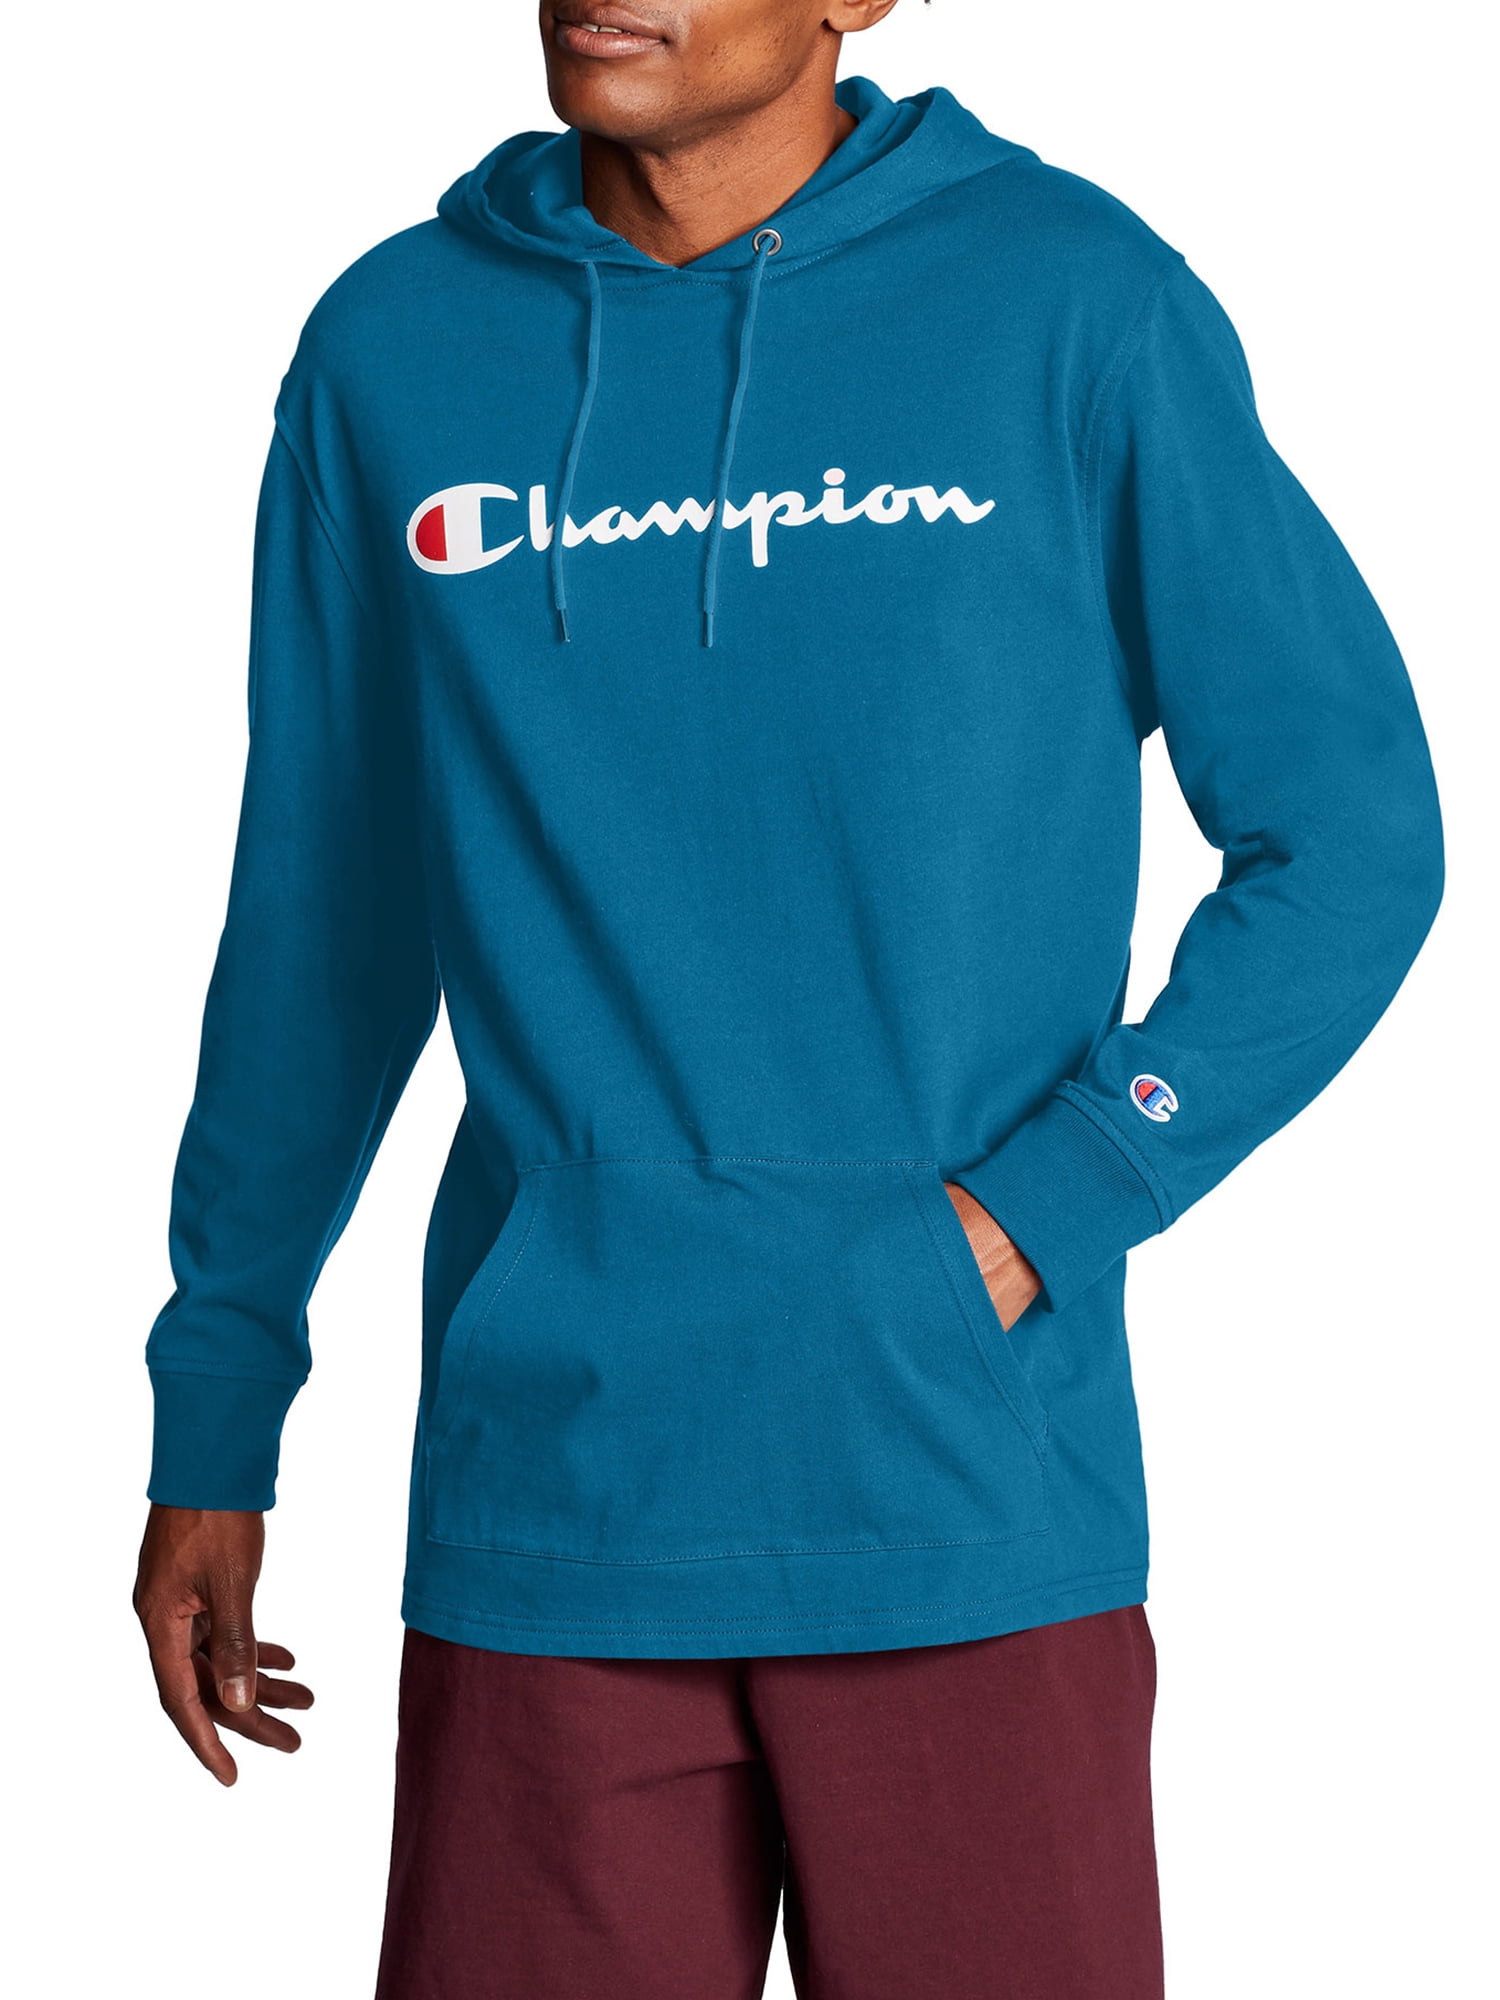 Champion sweatpant big logo vintage 90\u2019s black color champion sweatshirt hoodie jumper pullover jacket shirt size M